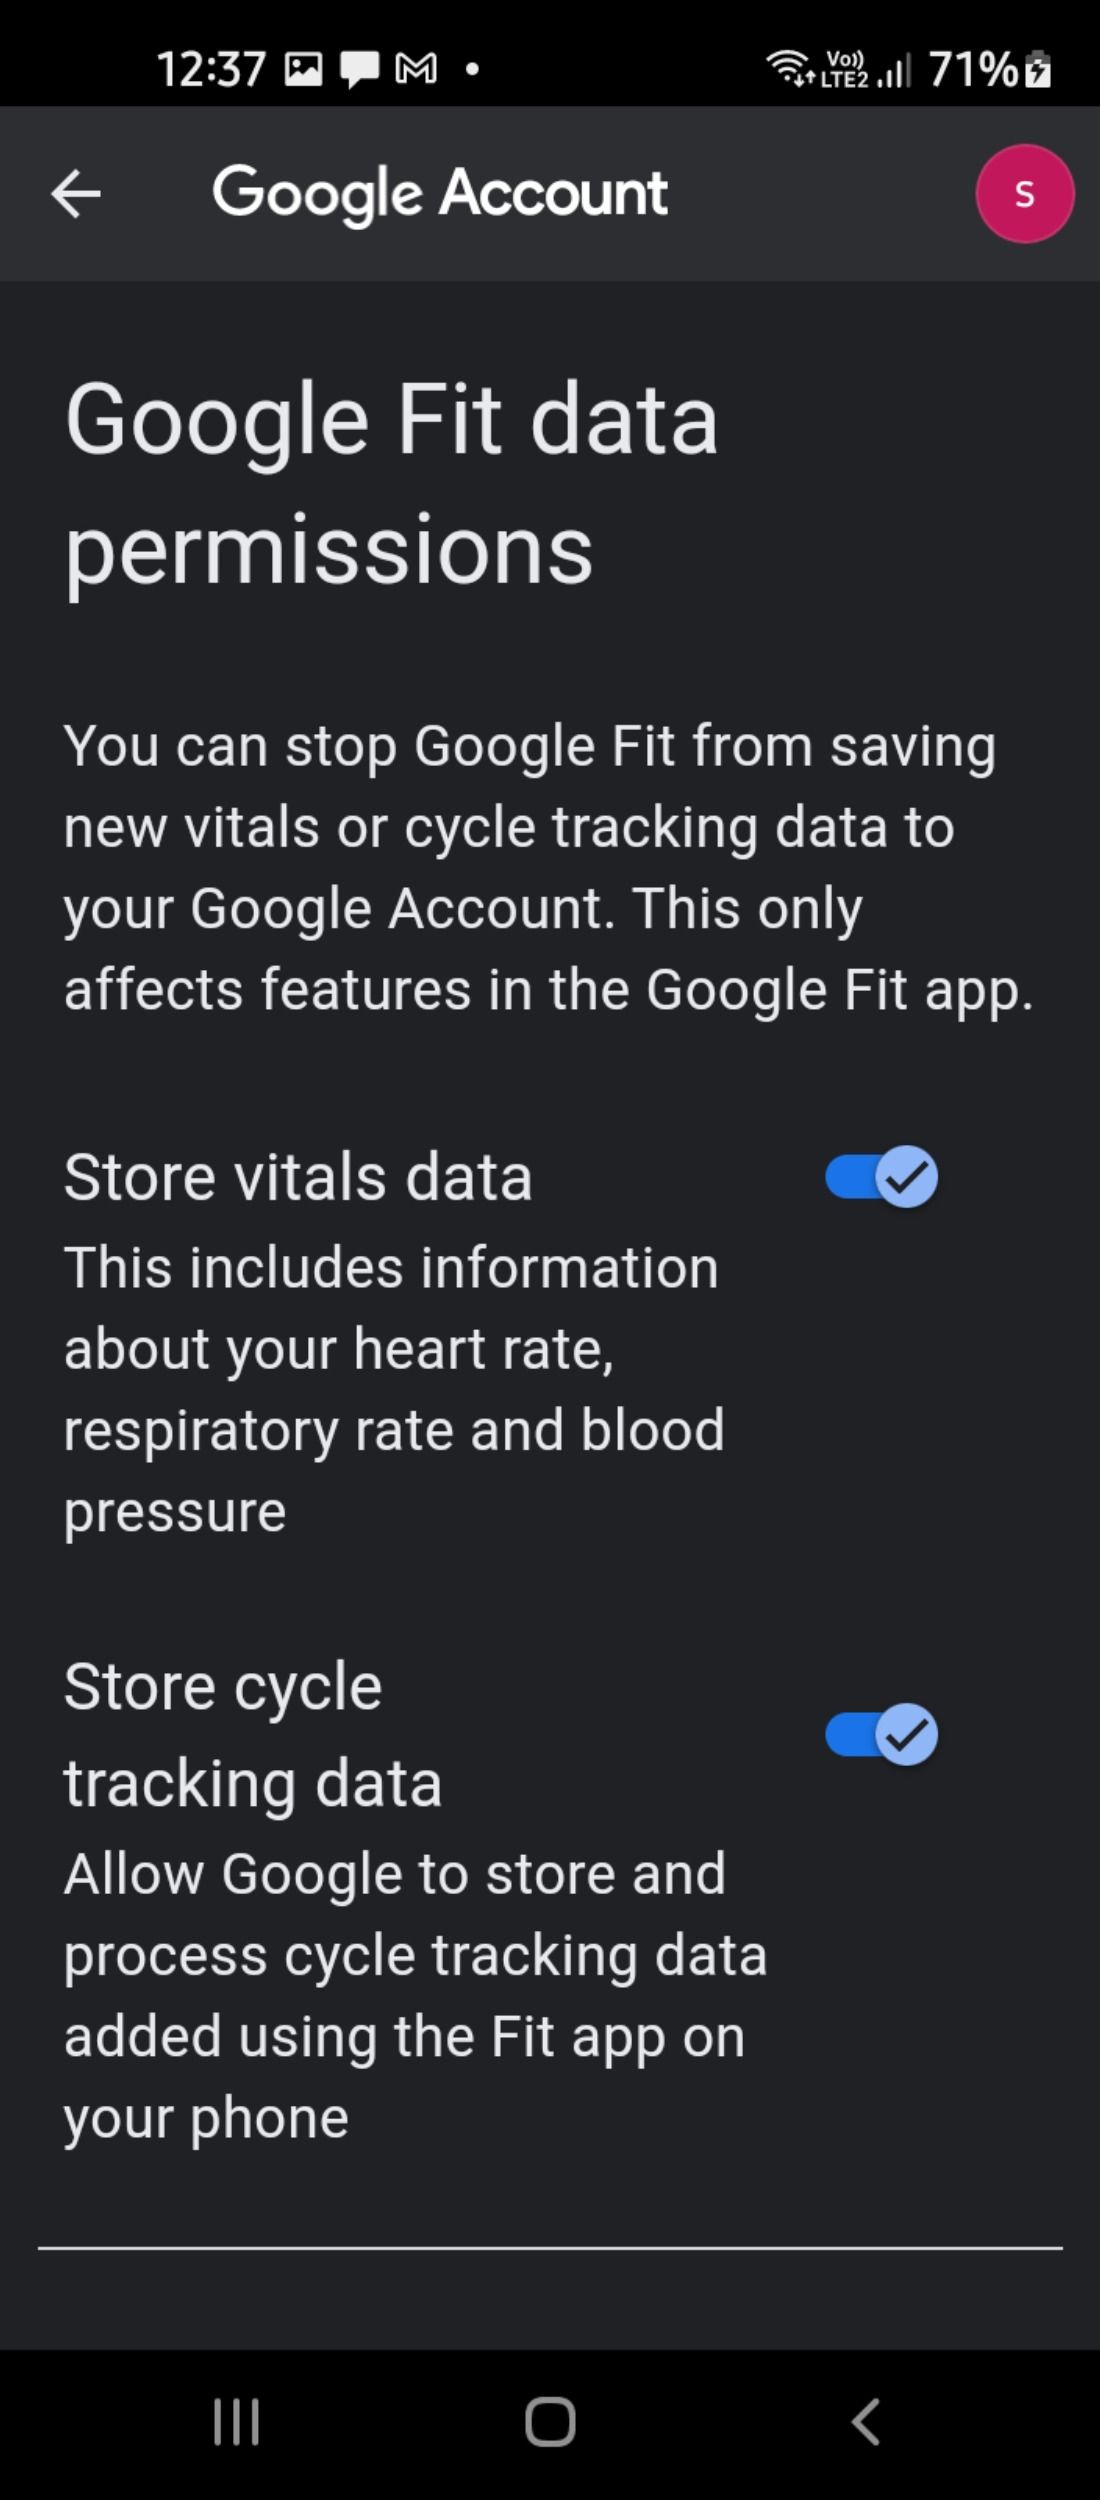 Store vitals data in google fit